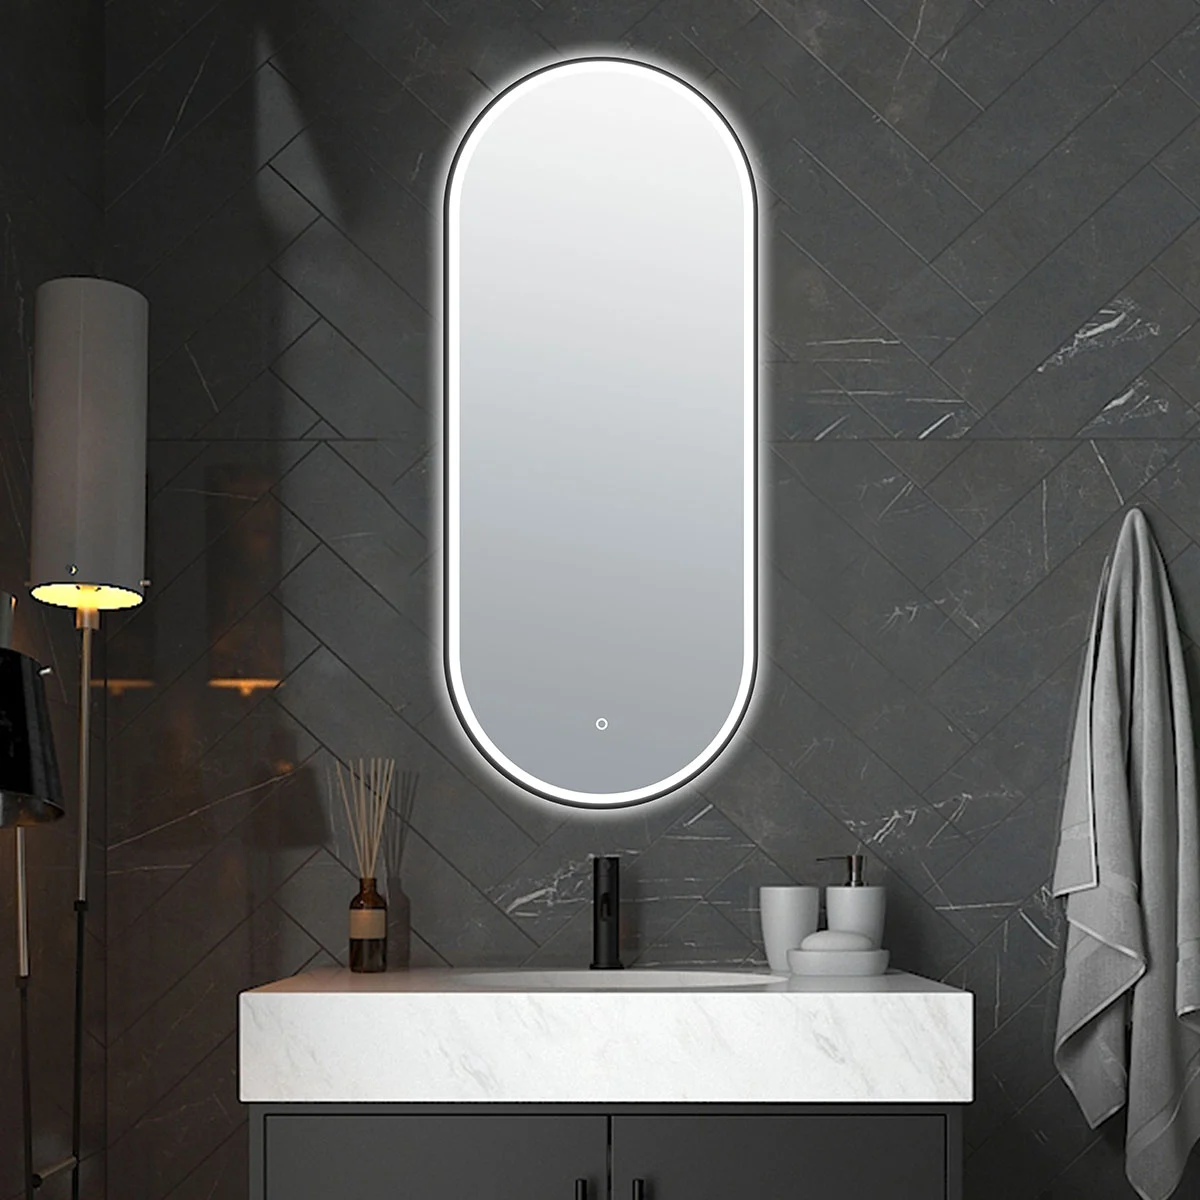 lam 697 bathroom mirror with back light